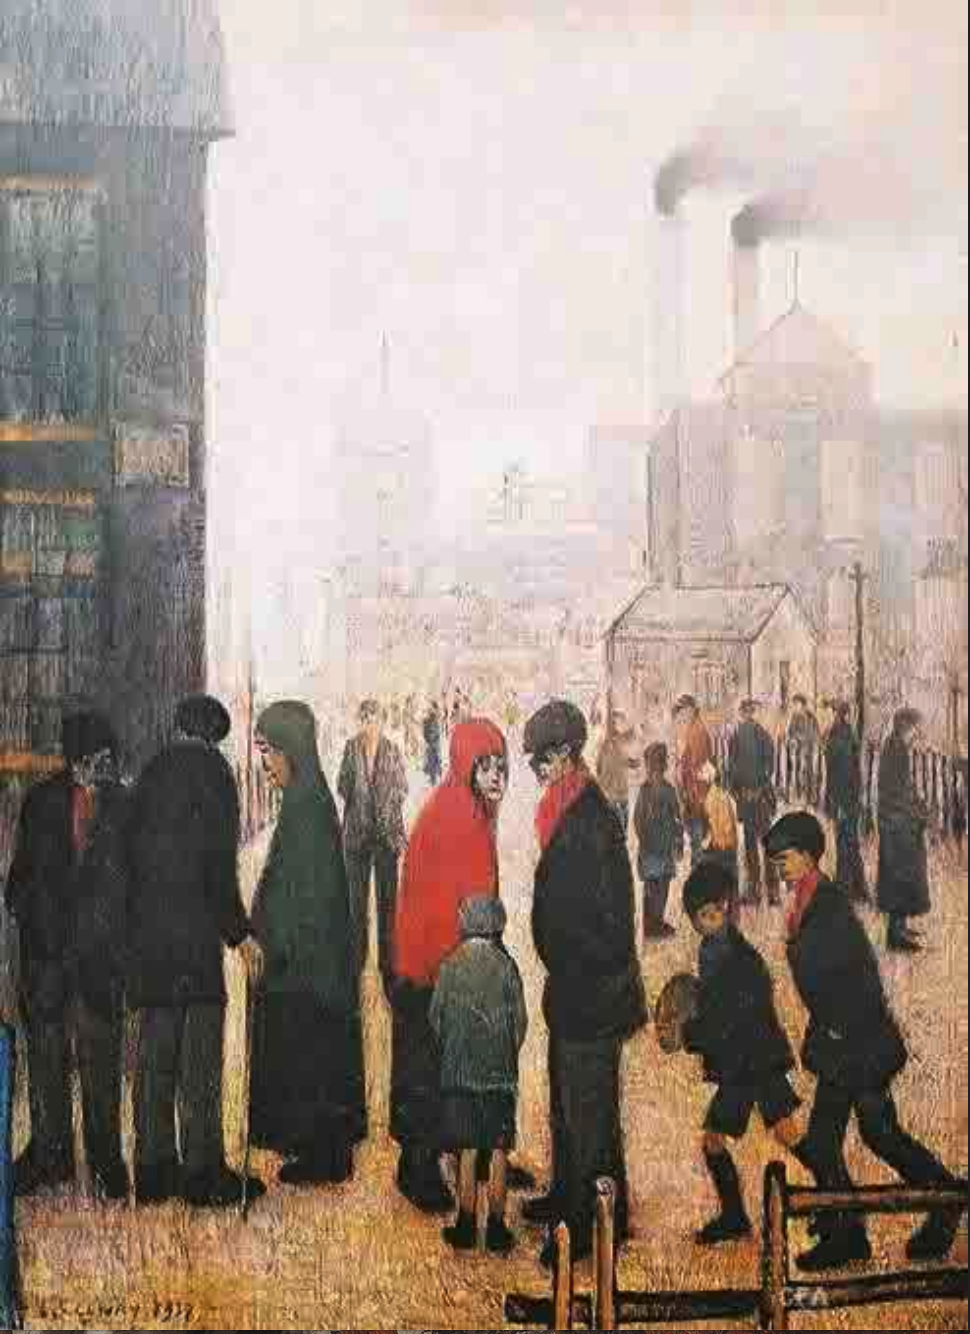 Salford street scene (1928) by Laurence Stephen Lowry (1887 - 1976), English artist.